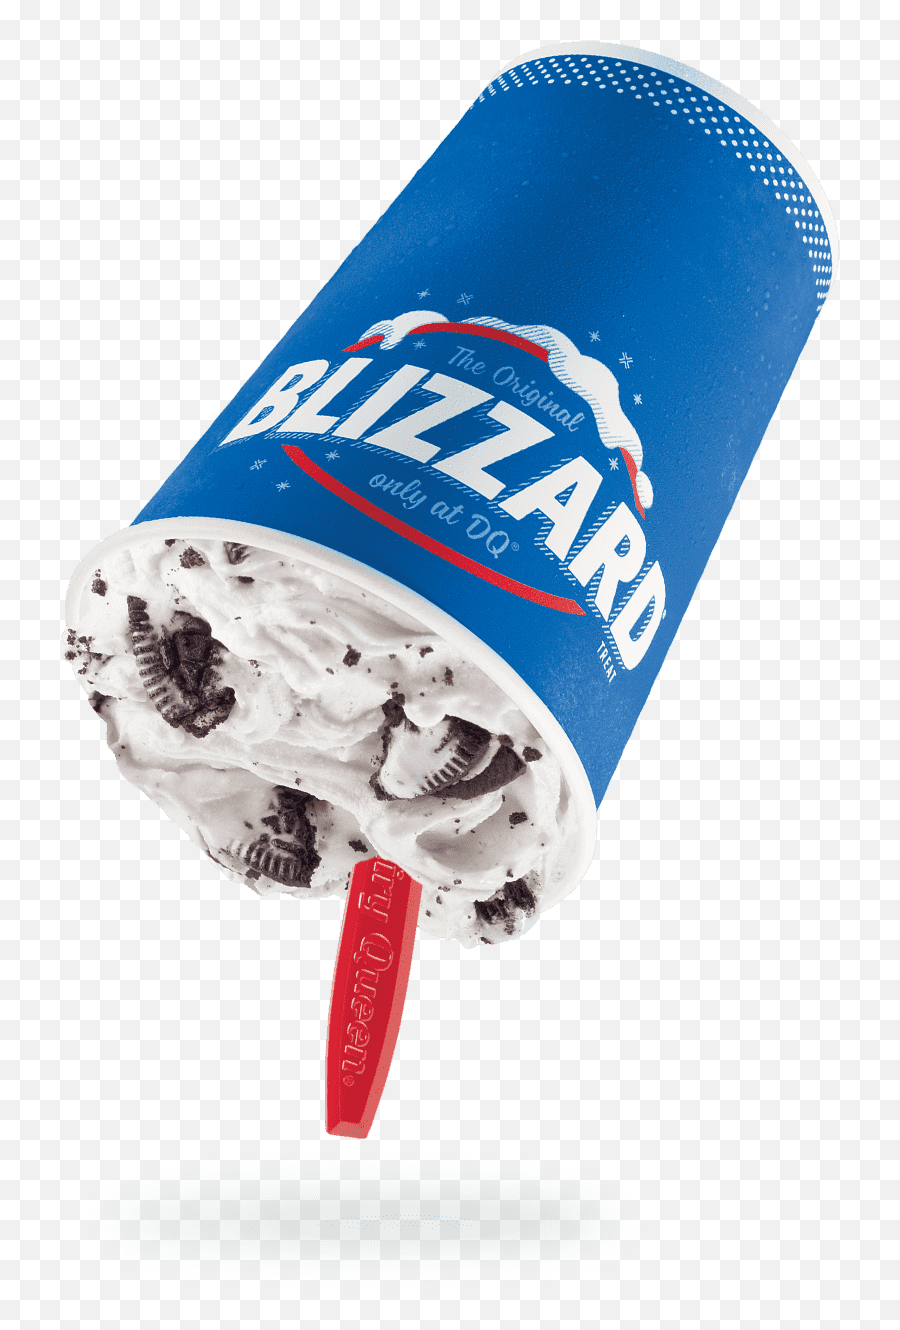 Oreo Cookie Blizzard Treat Dairy Queen Menu - Dairy Queen Oreo Blizzard Png,Oreo Icon Mini